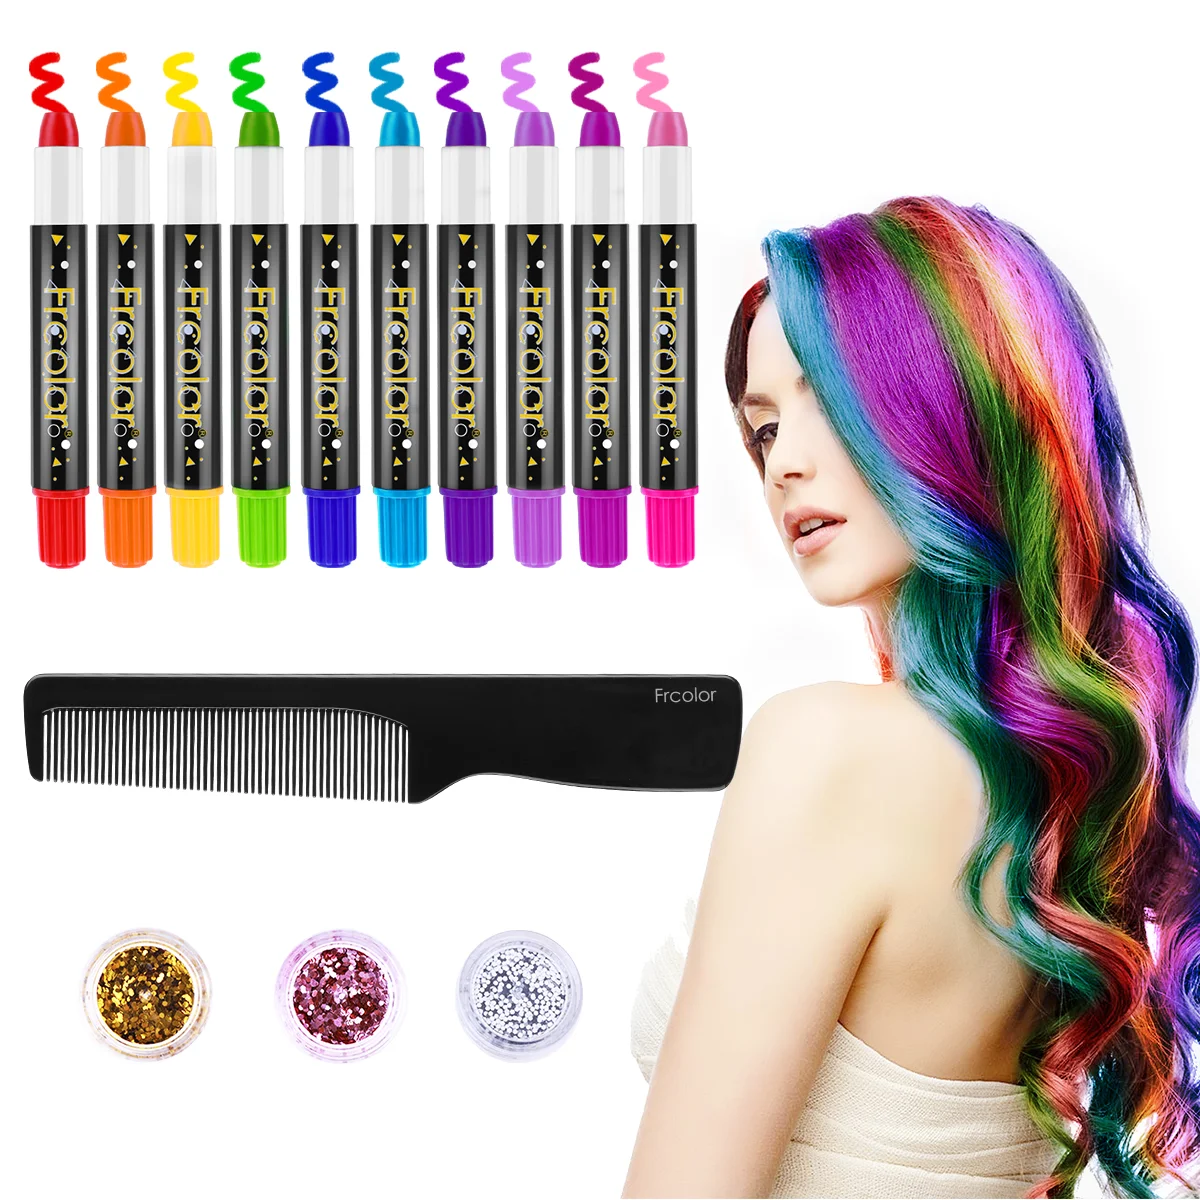 Frcolor Washable 10 Colors Non Temporary Rainbow Hair Dye Hair Chalk Set for DIY Birthday Party